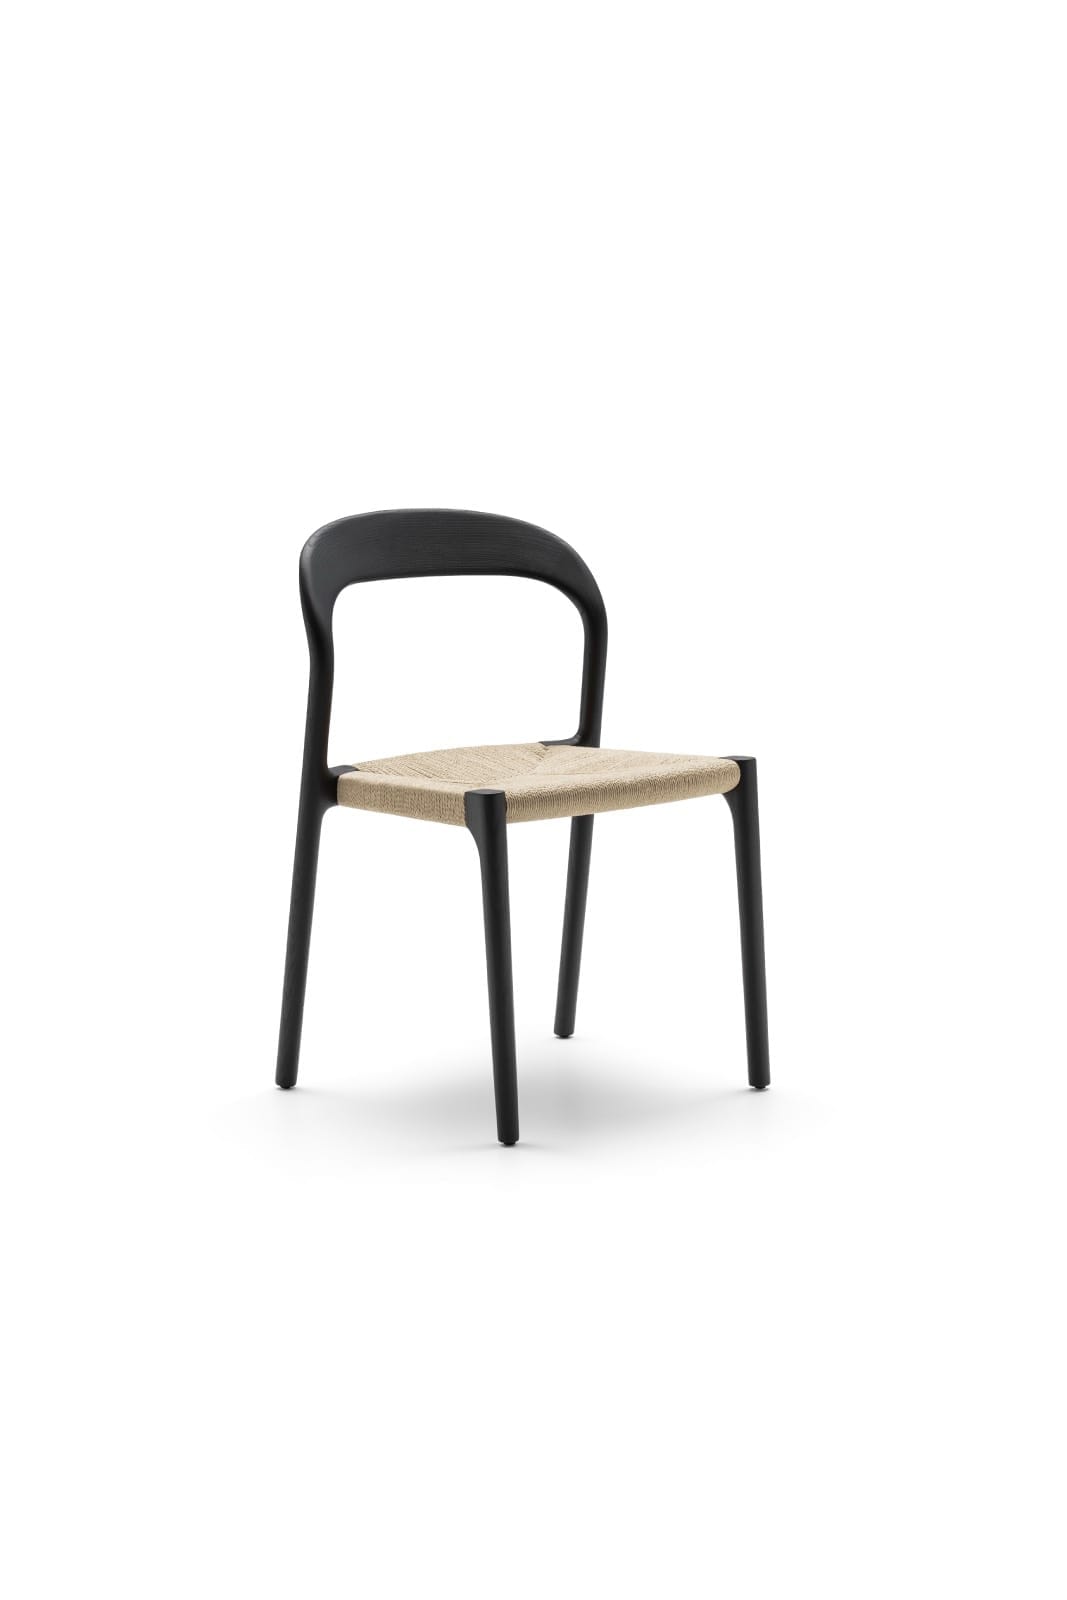 designer wood chair by living divani